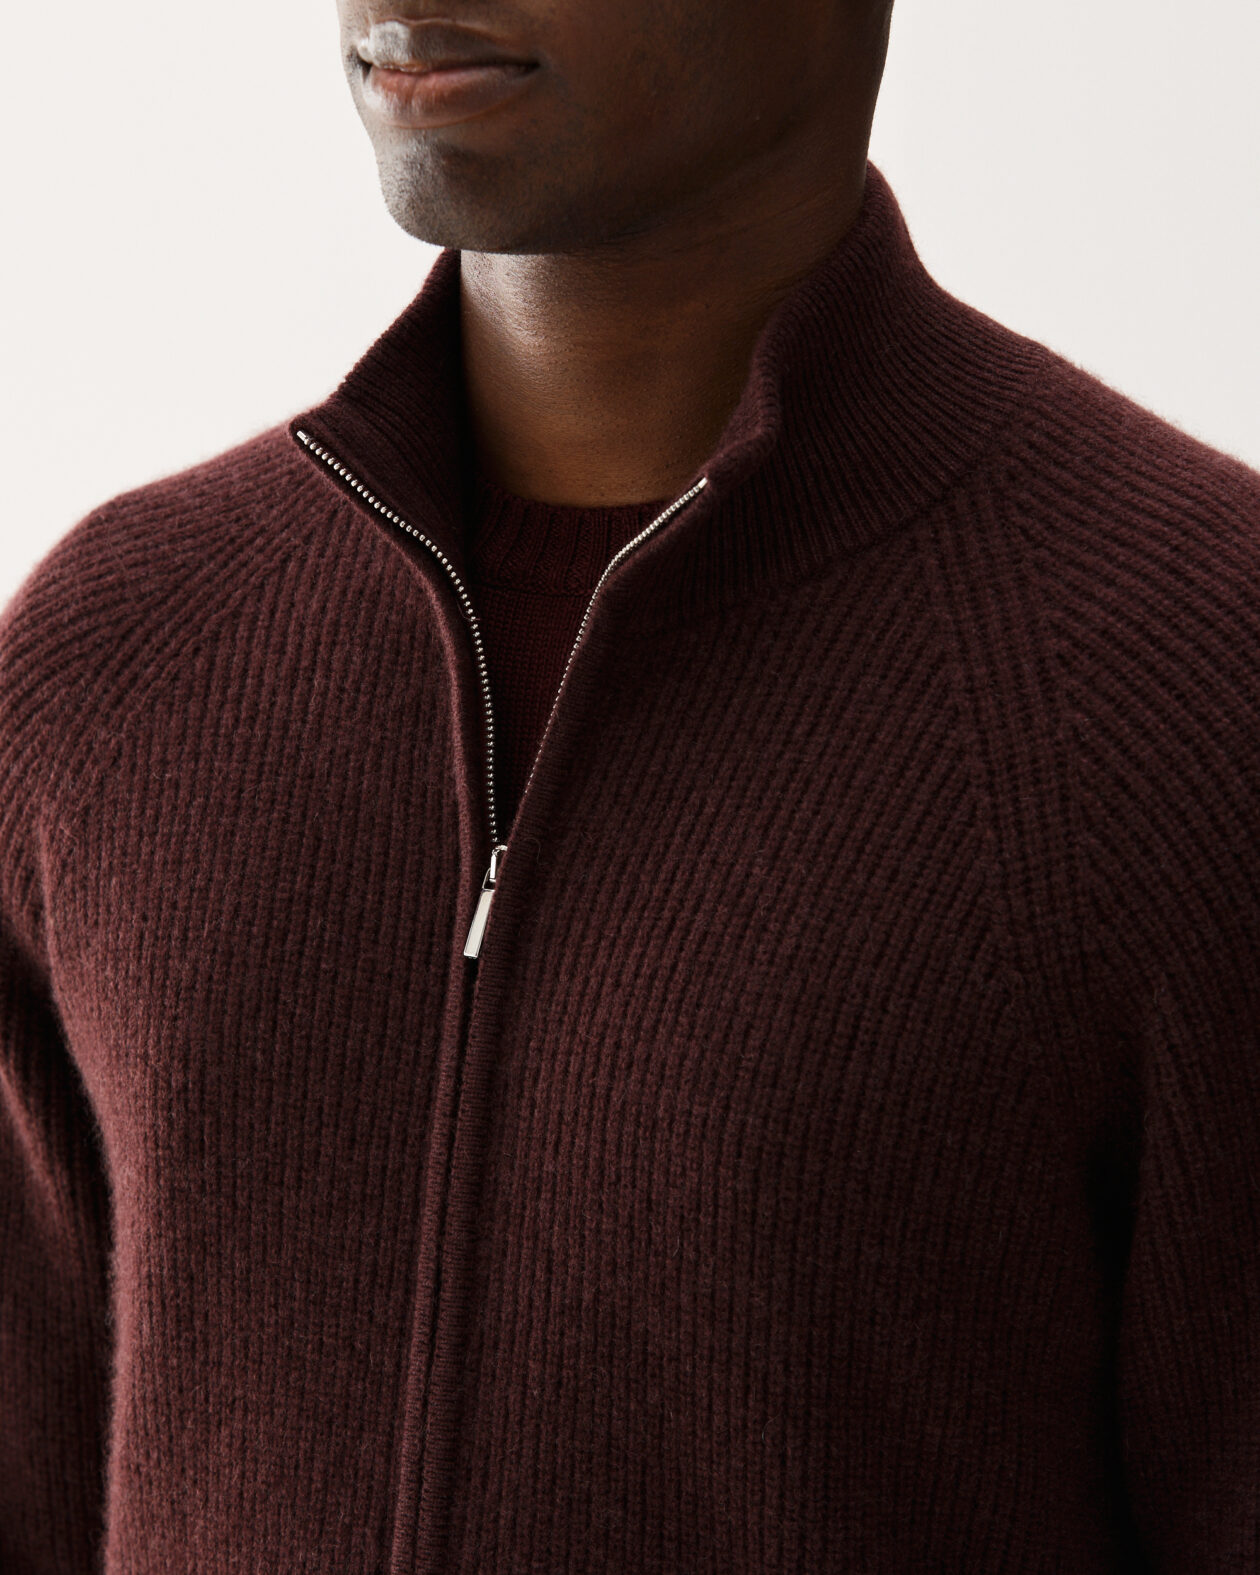 Full-Zip Cashmere Sweater Burgundy